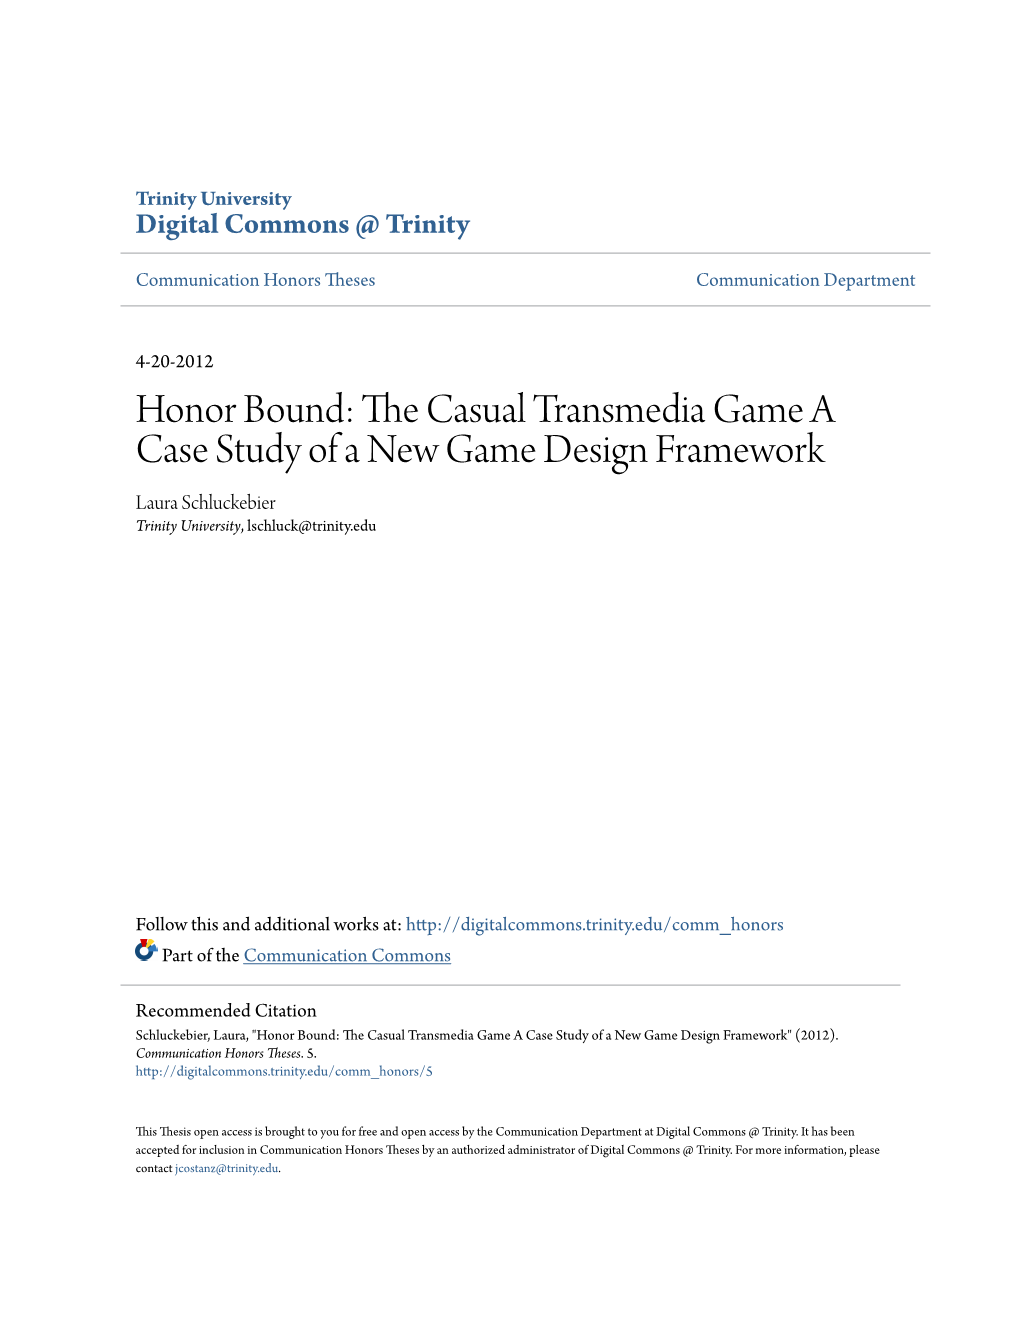 Honor Bound: the Ac Sual Transmedia Game a Case Study of a New Game Design Framework Laura Schluckebier Trinity University, Lschluck@Trinity.Edu